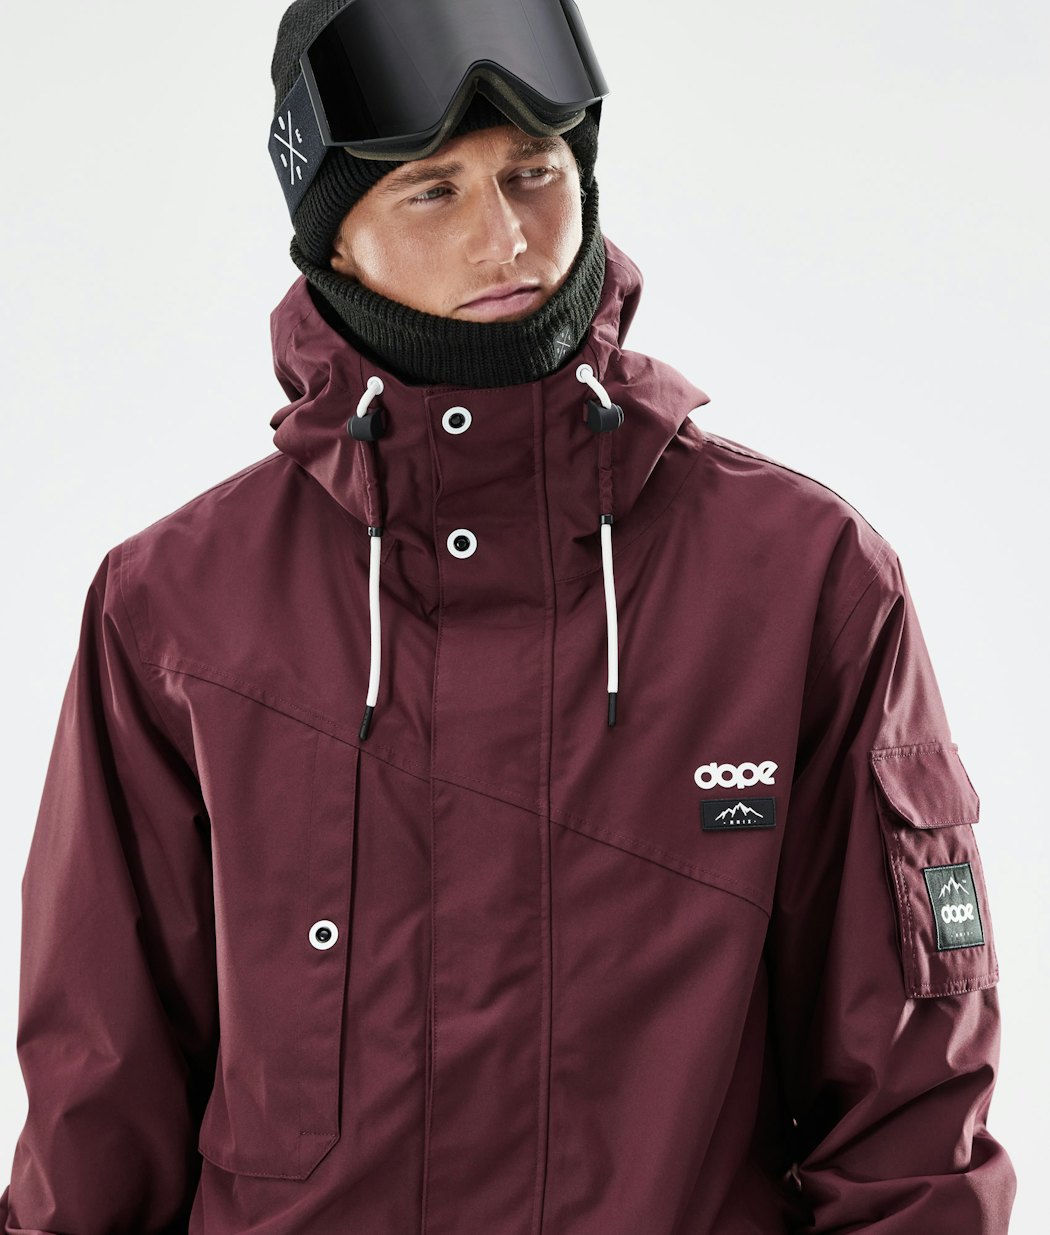 Adept 2021 Ski Jacket Men Burgundy